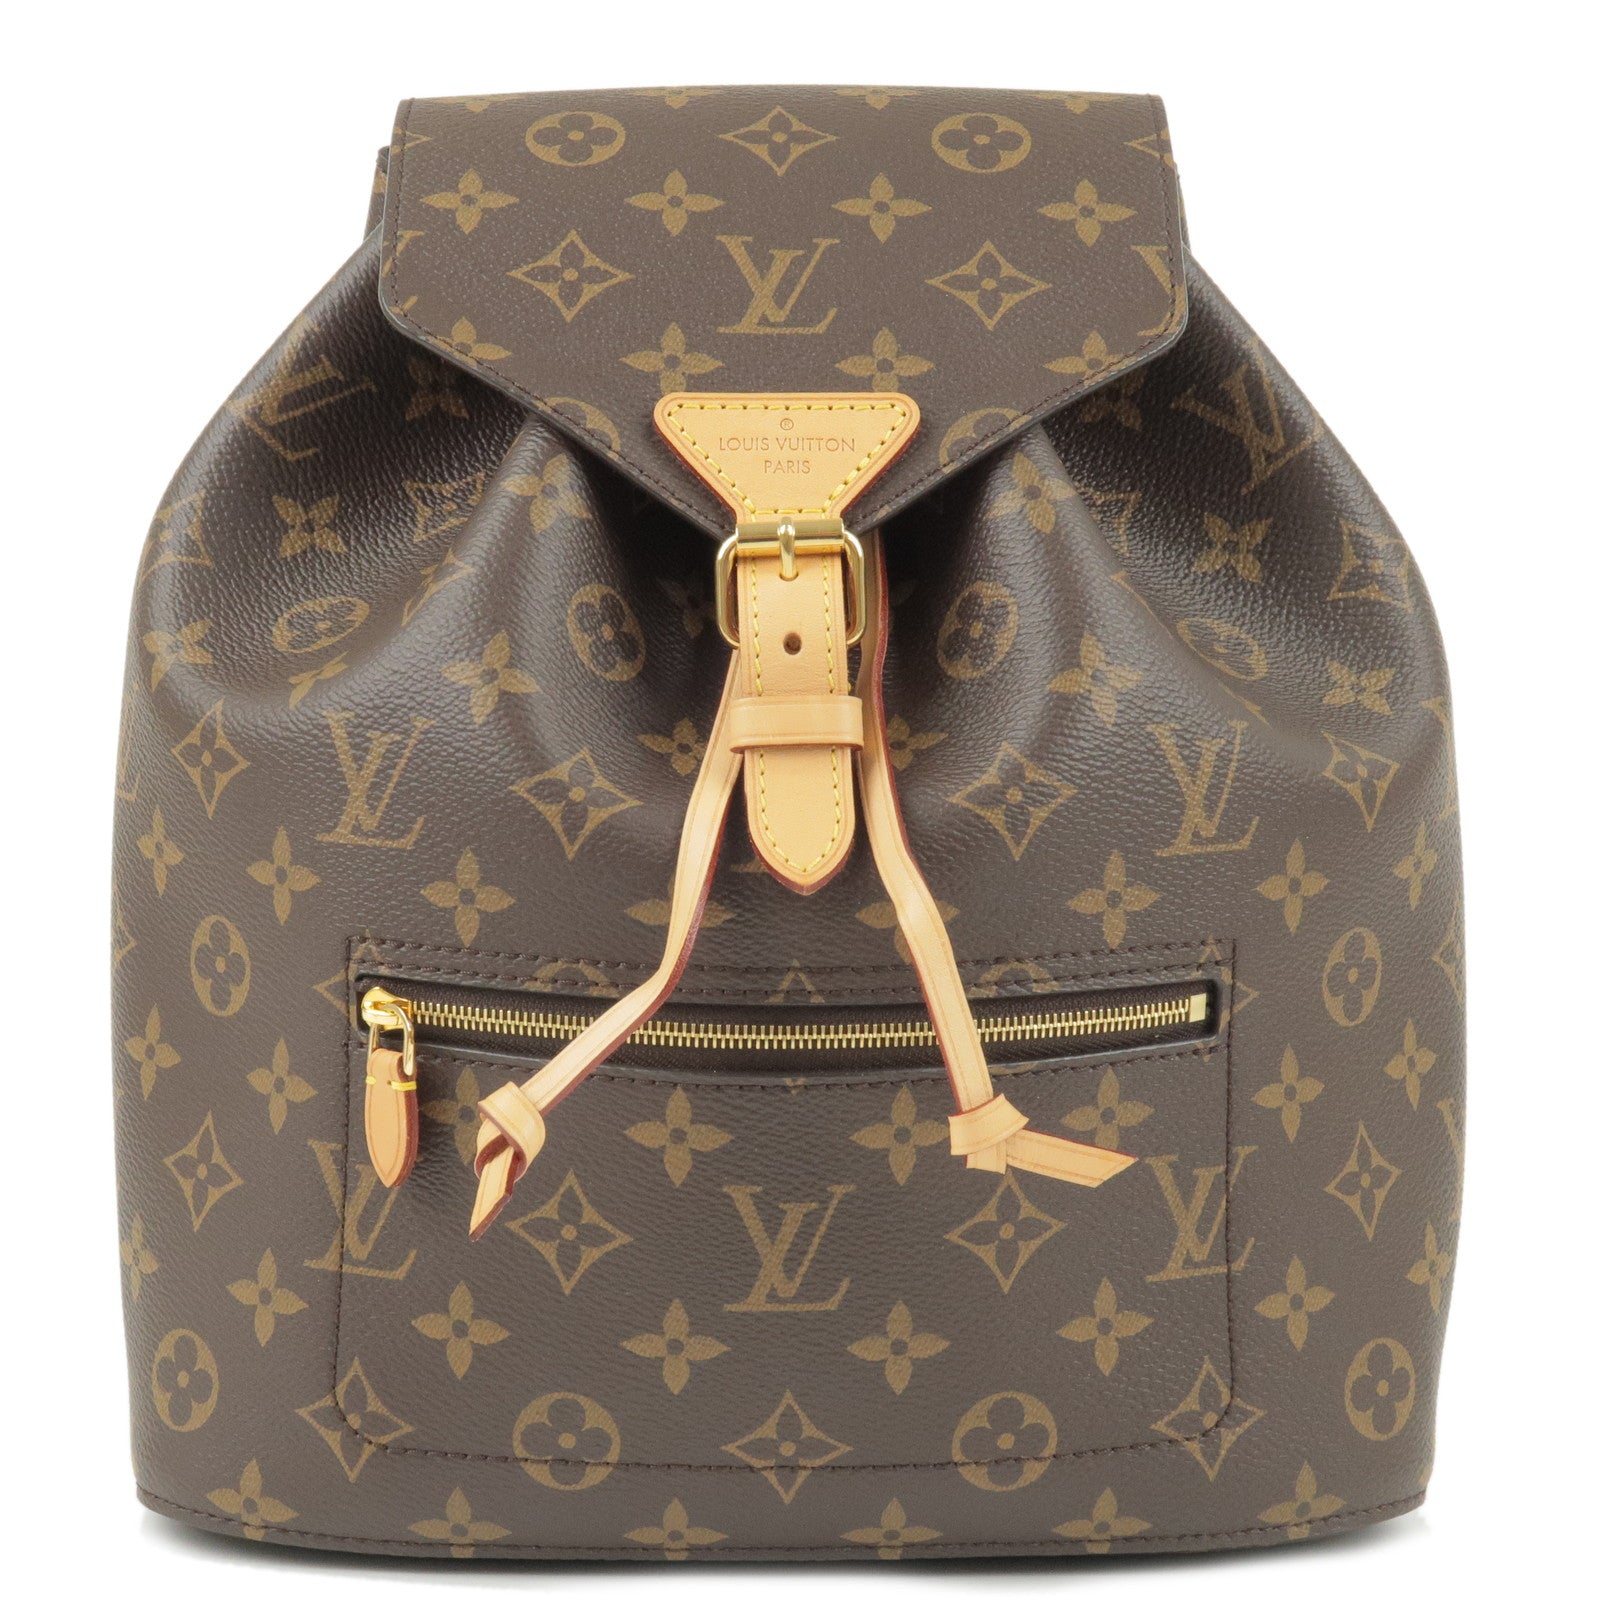 Louis-Vuitton-Monogram-Montsouris-Ruck-Sack-Back-Pack-M43431